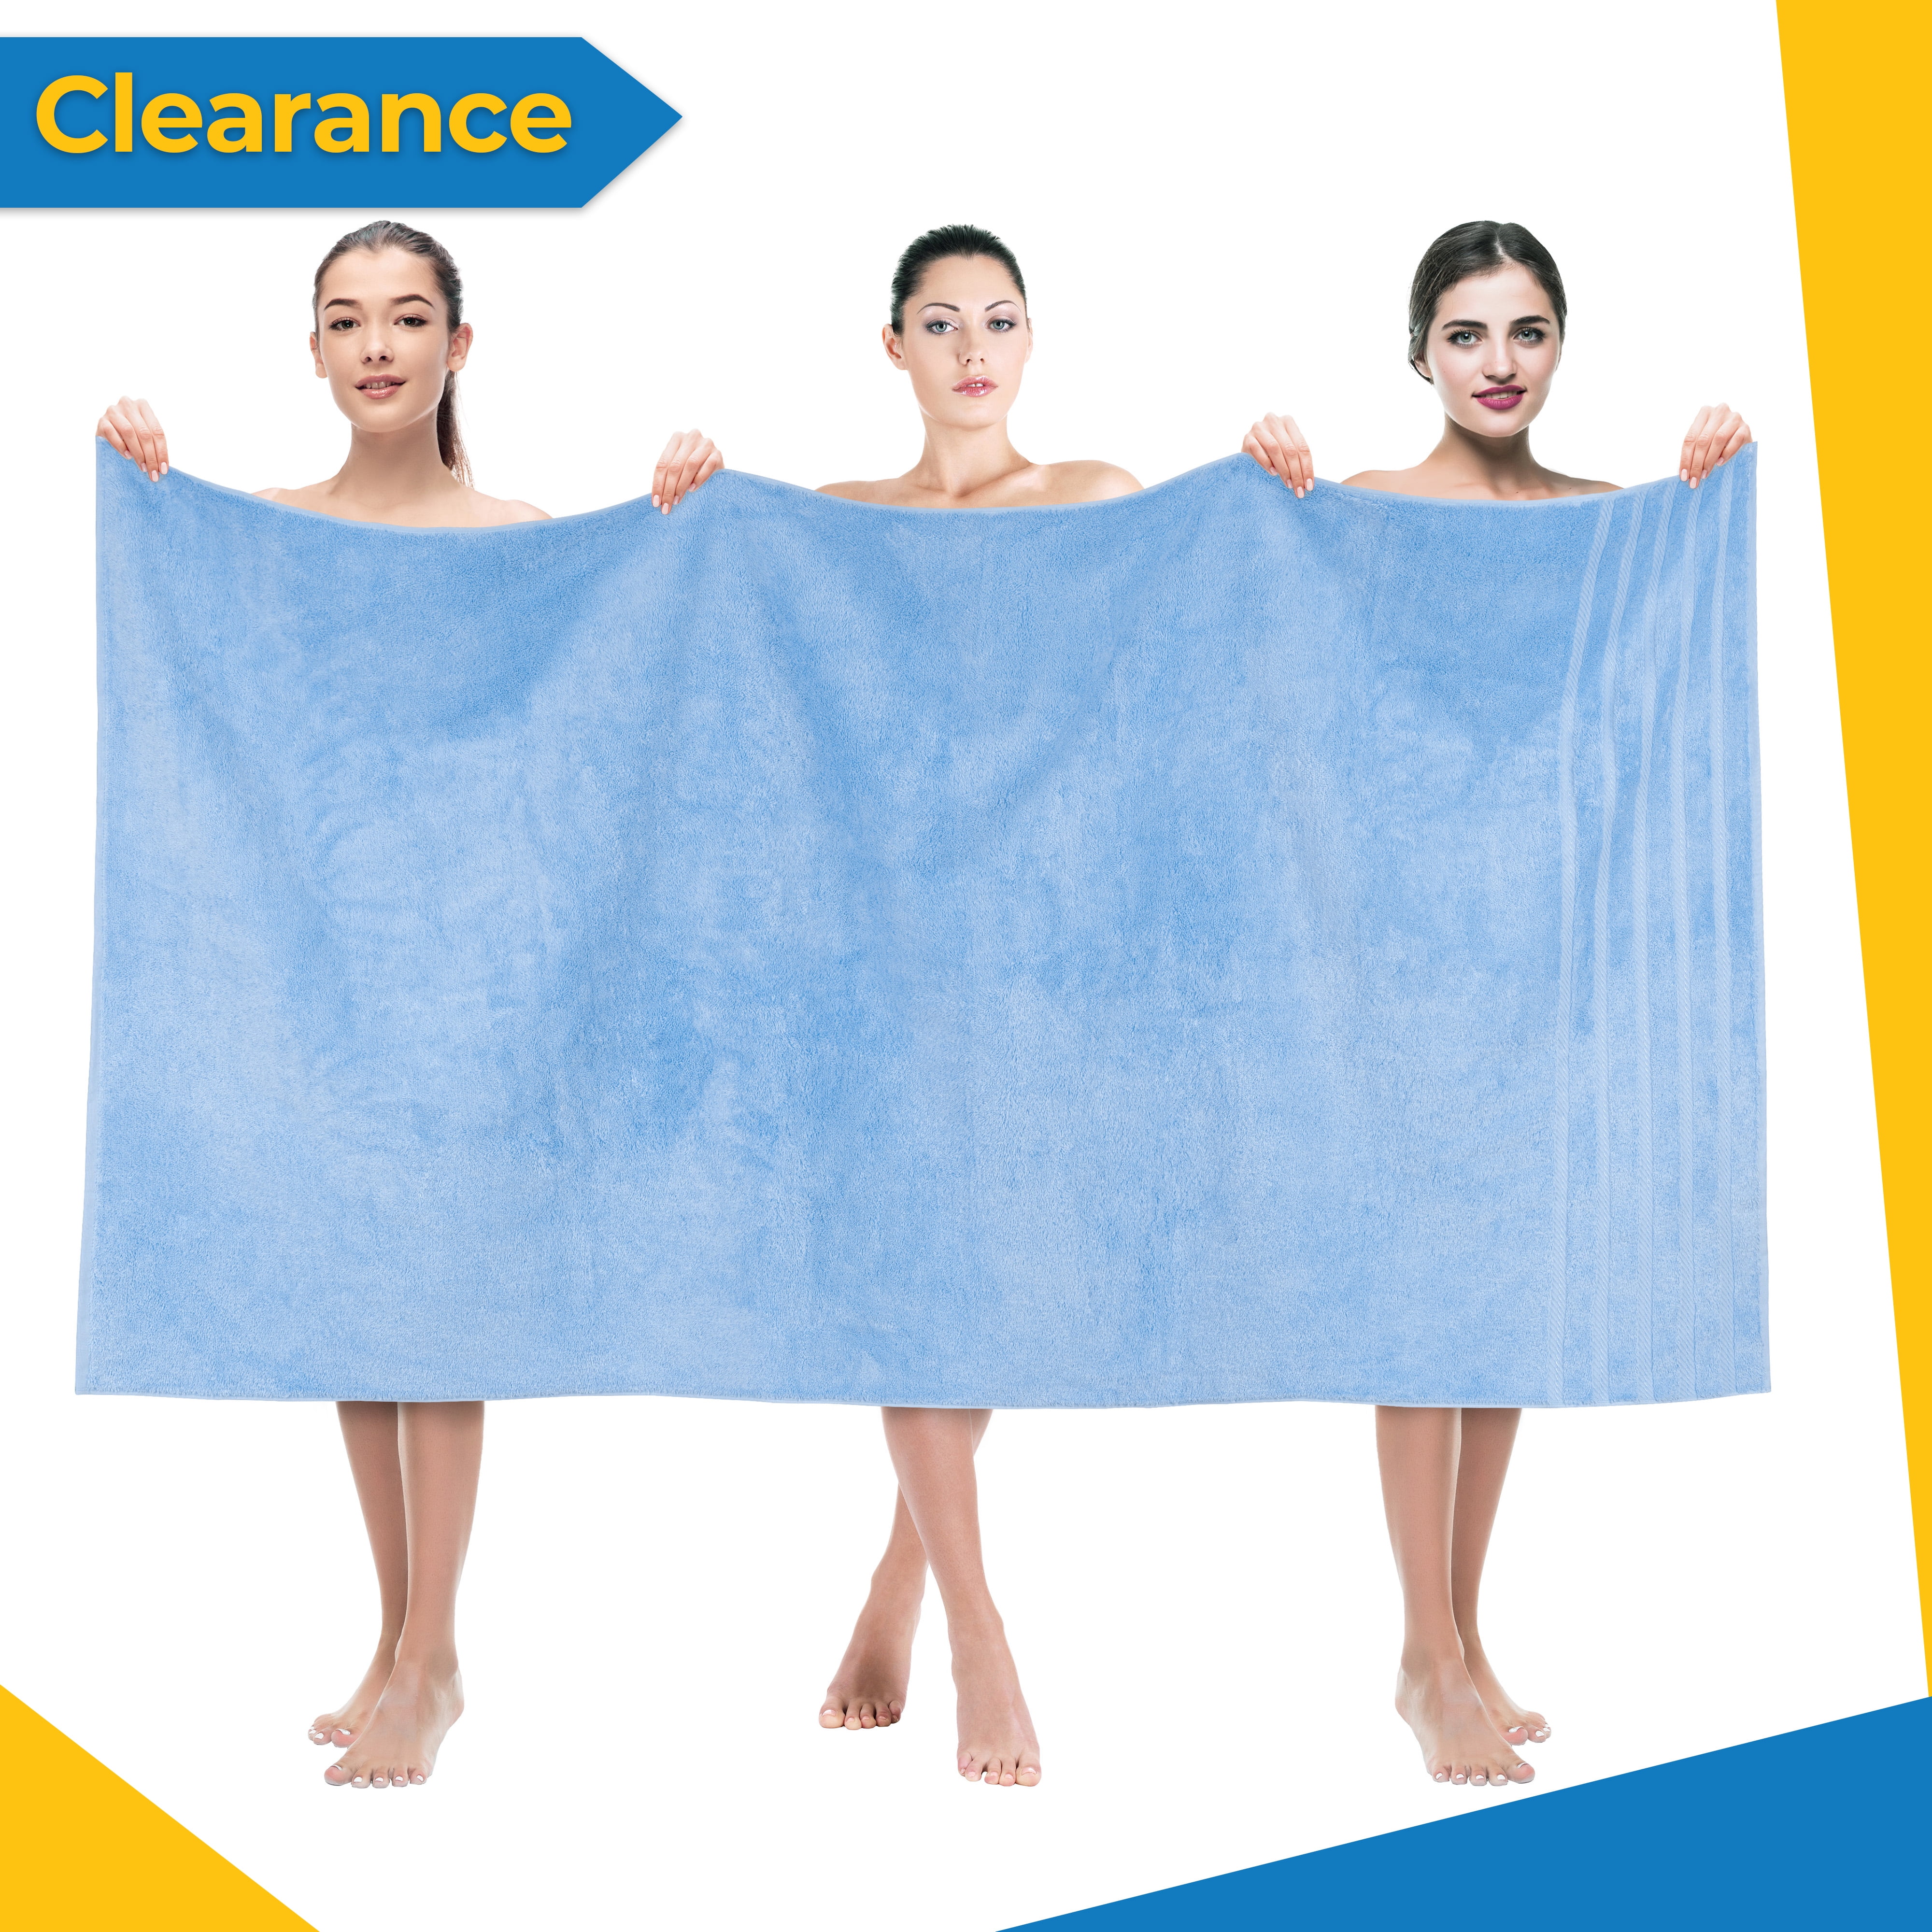 American Soft Linen Bath Sheet 35x70 inch 100% Turkish Cotton Bath Towel Sheets - Sky Blue, Size: Jumbo Bath Sheet 35x70